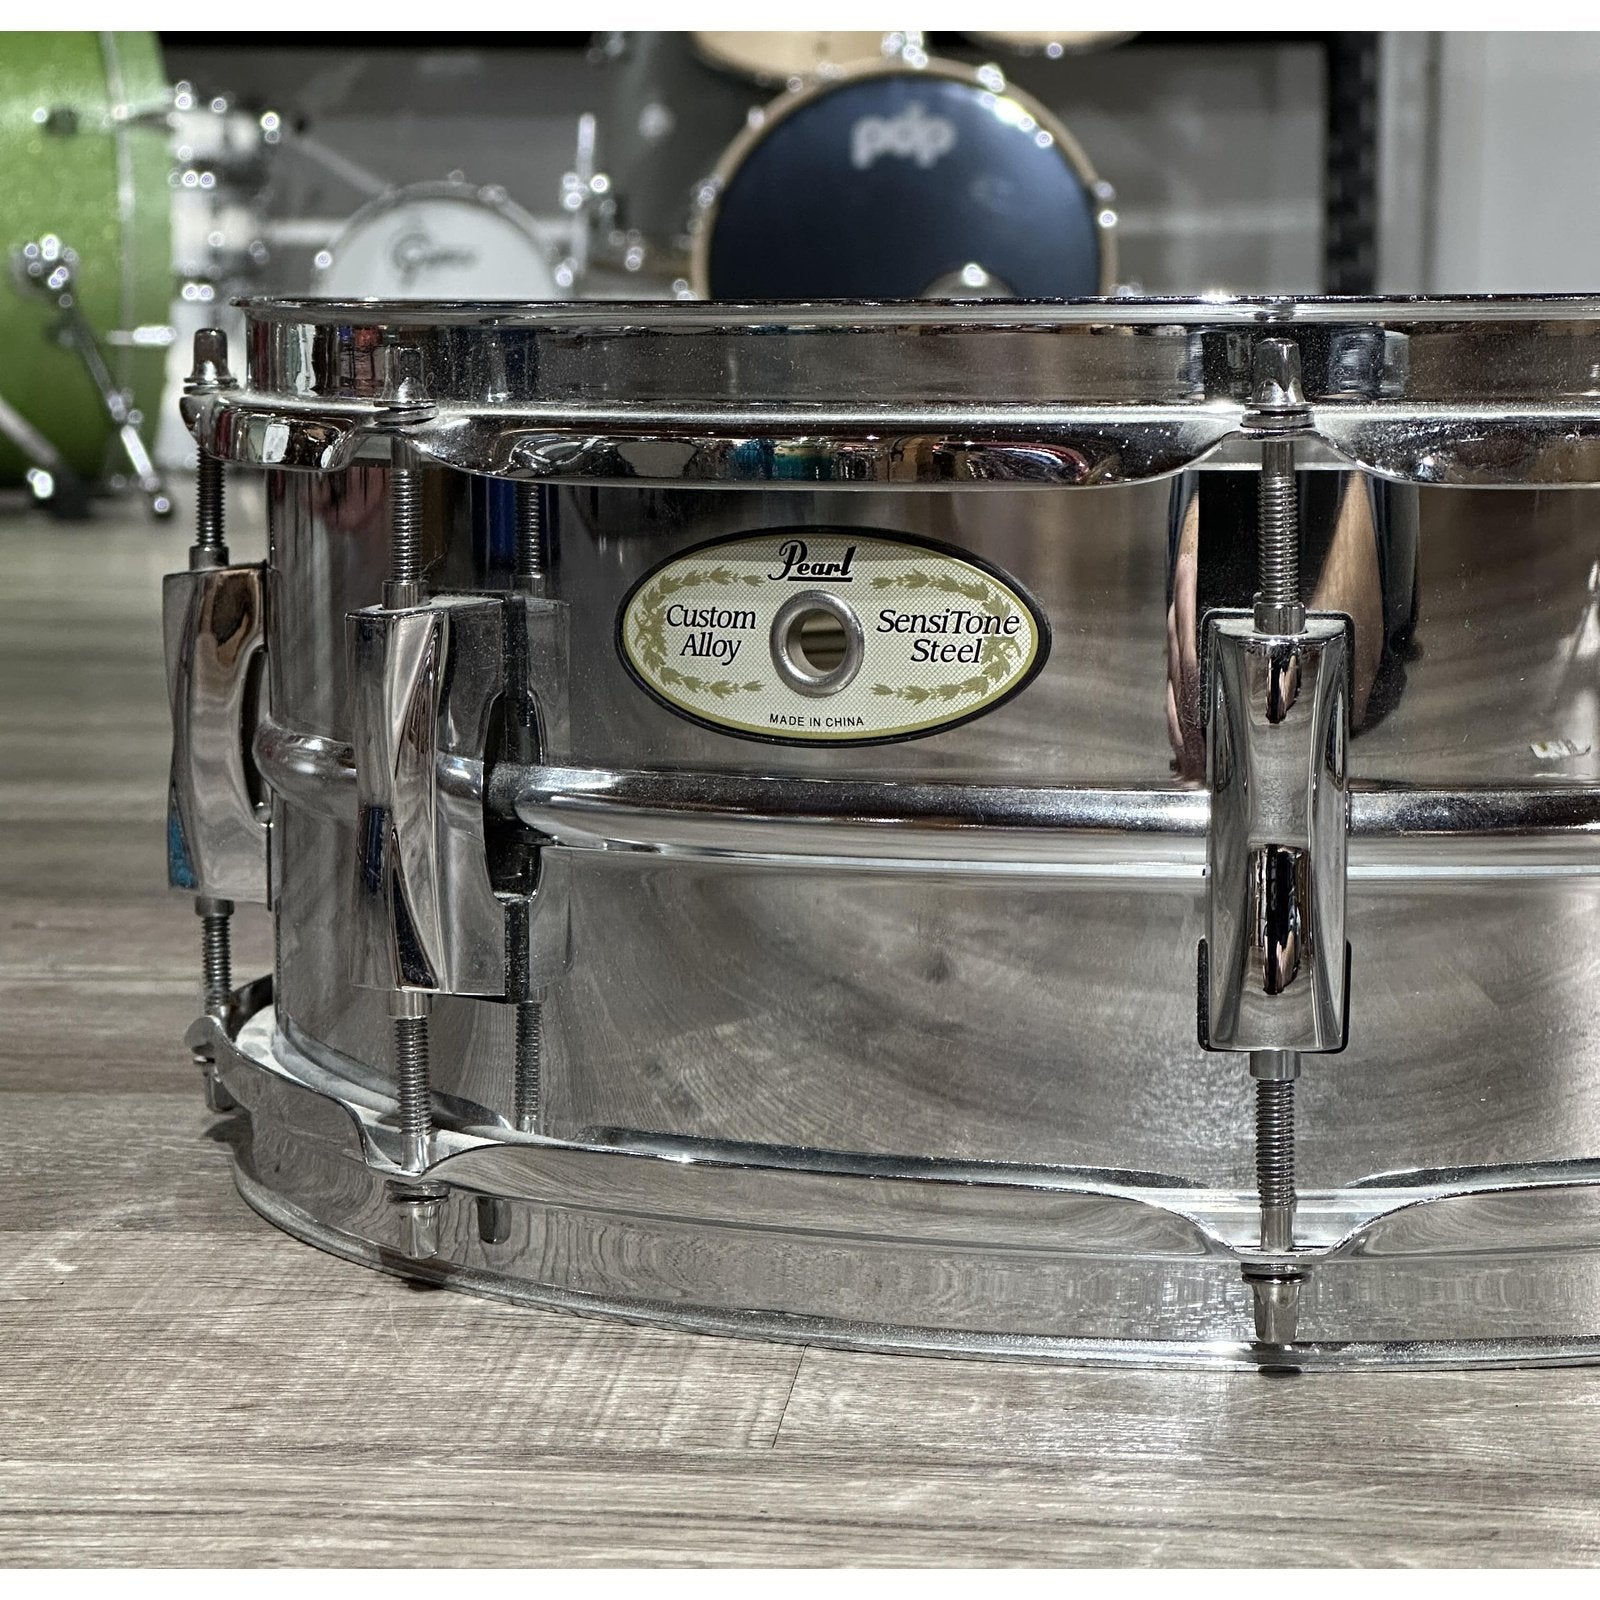 Pearl Sensitone Heritage Alloy Snare 14 x 5 in. Steel